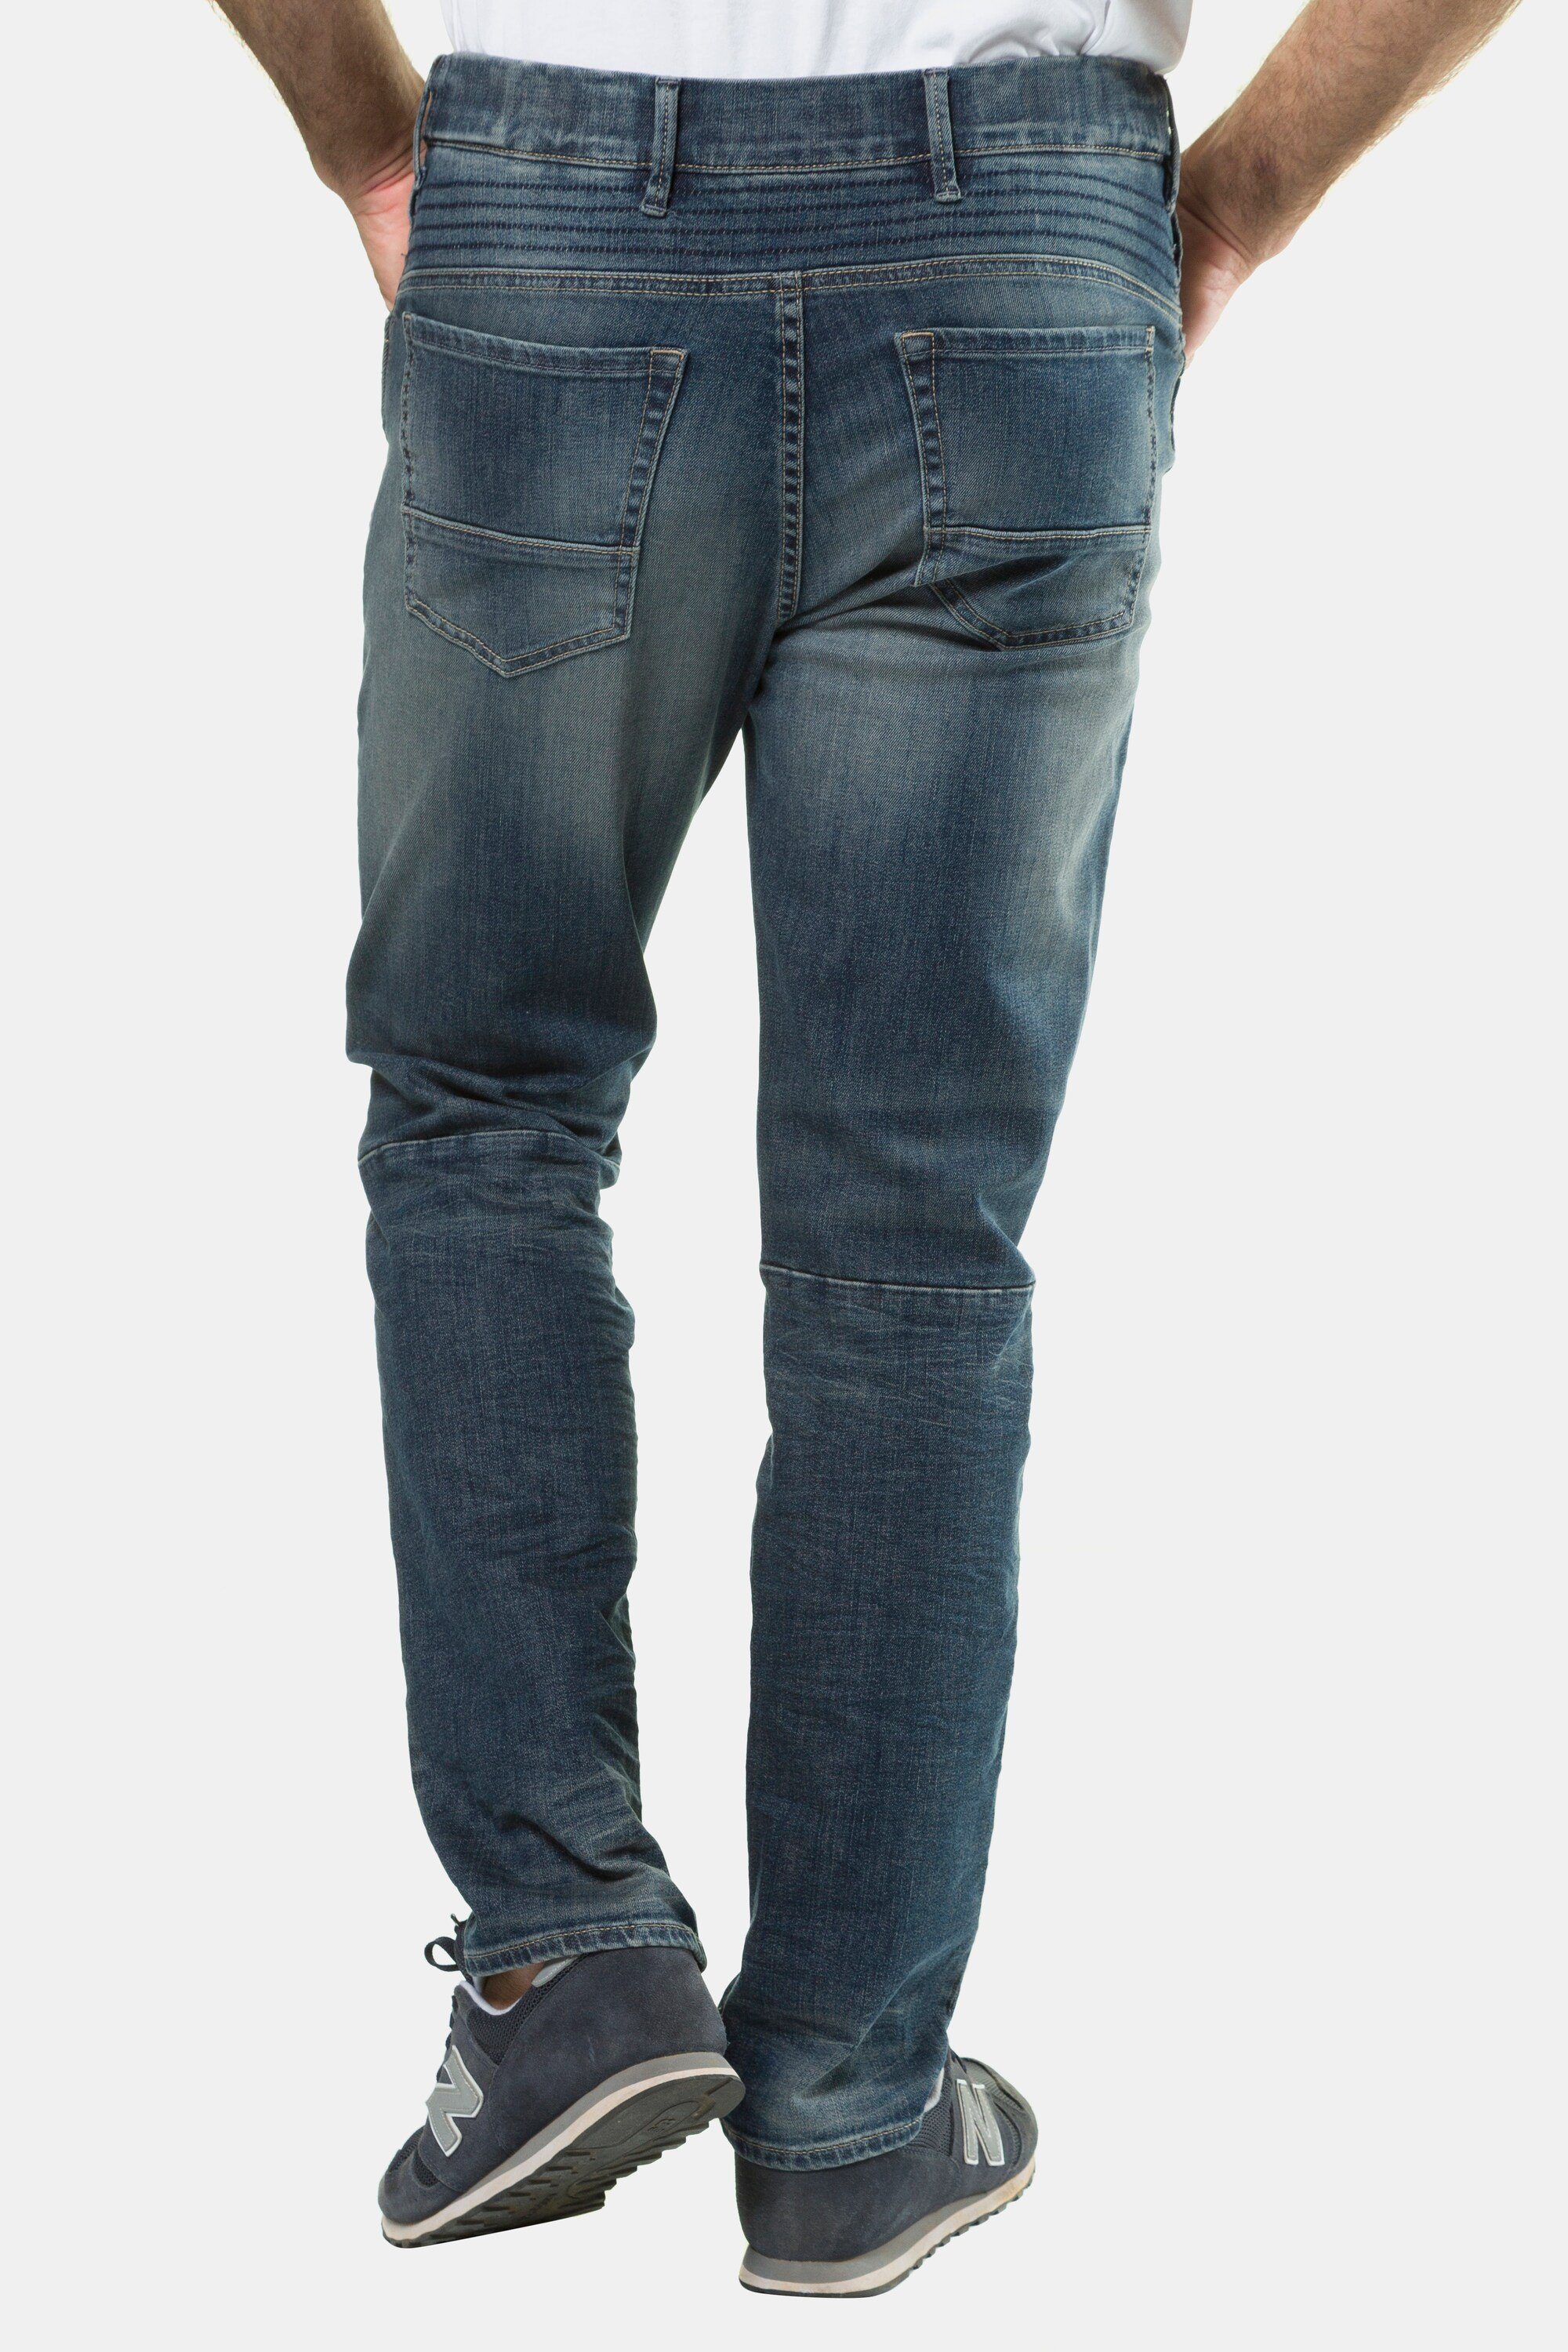 Cargohose Jeans stone JP1880 Fit Traveller-Bund Denim blue Straight